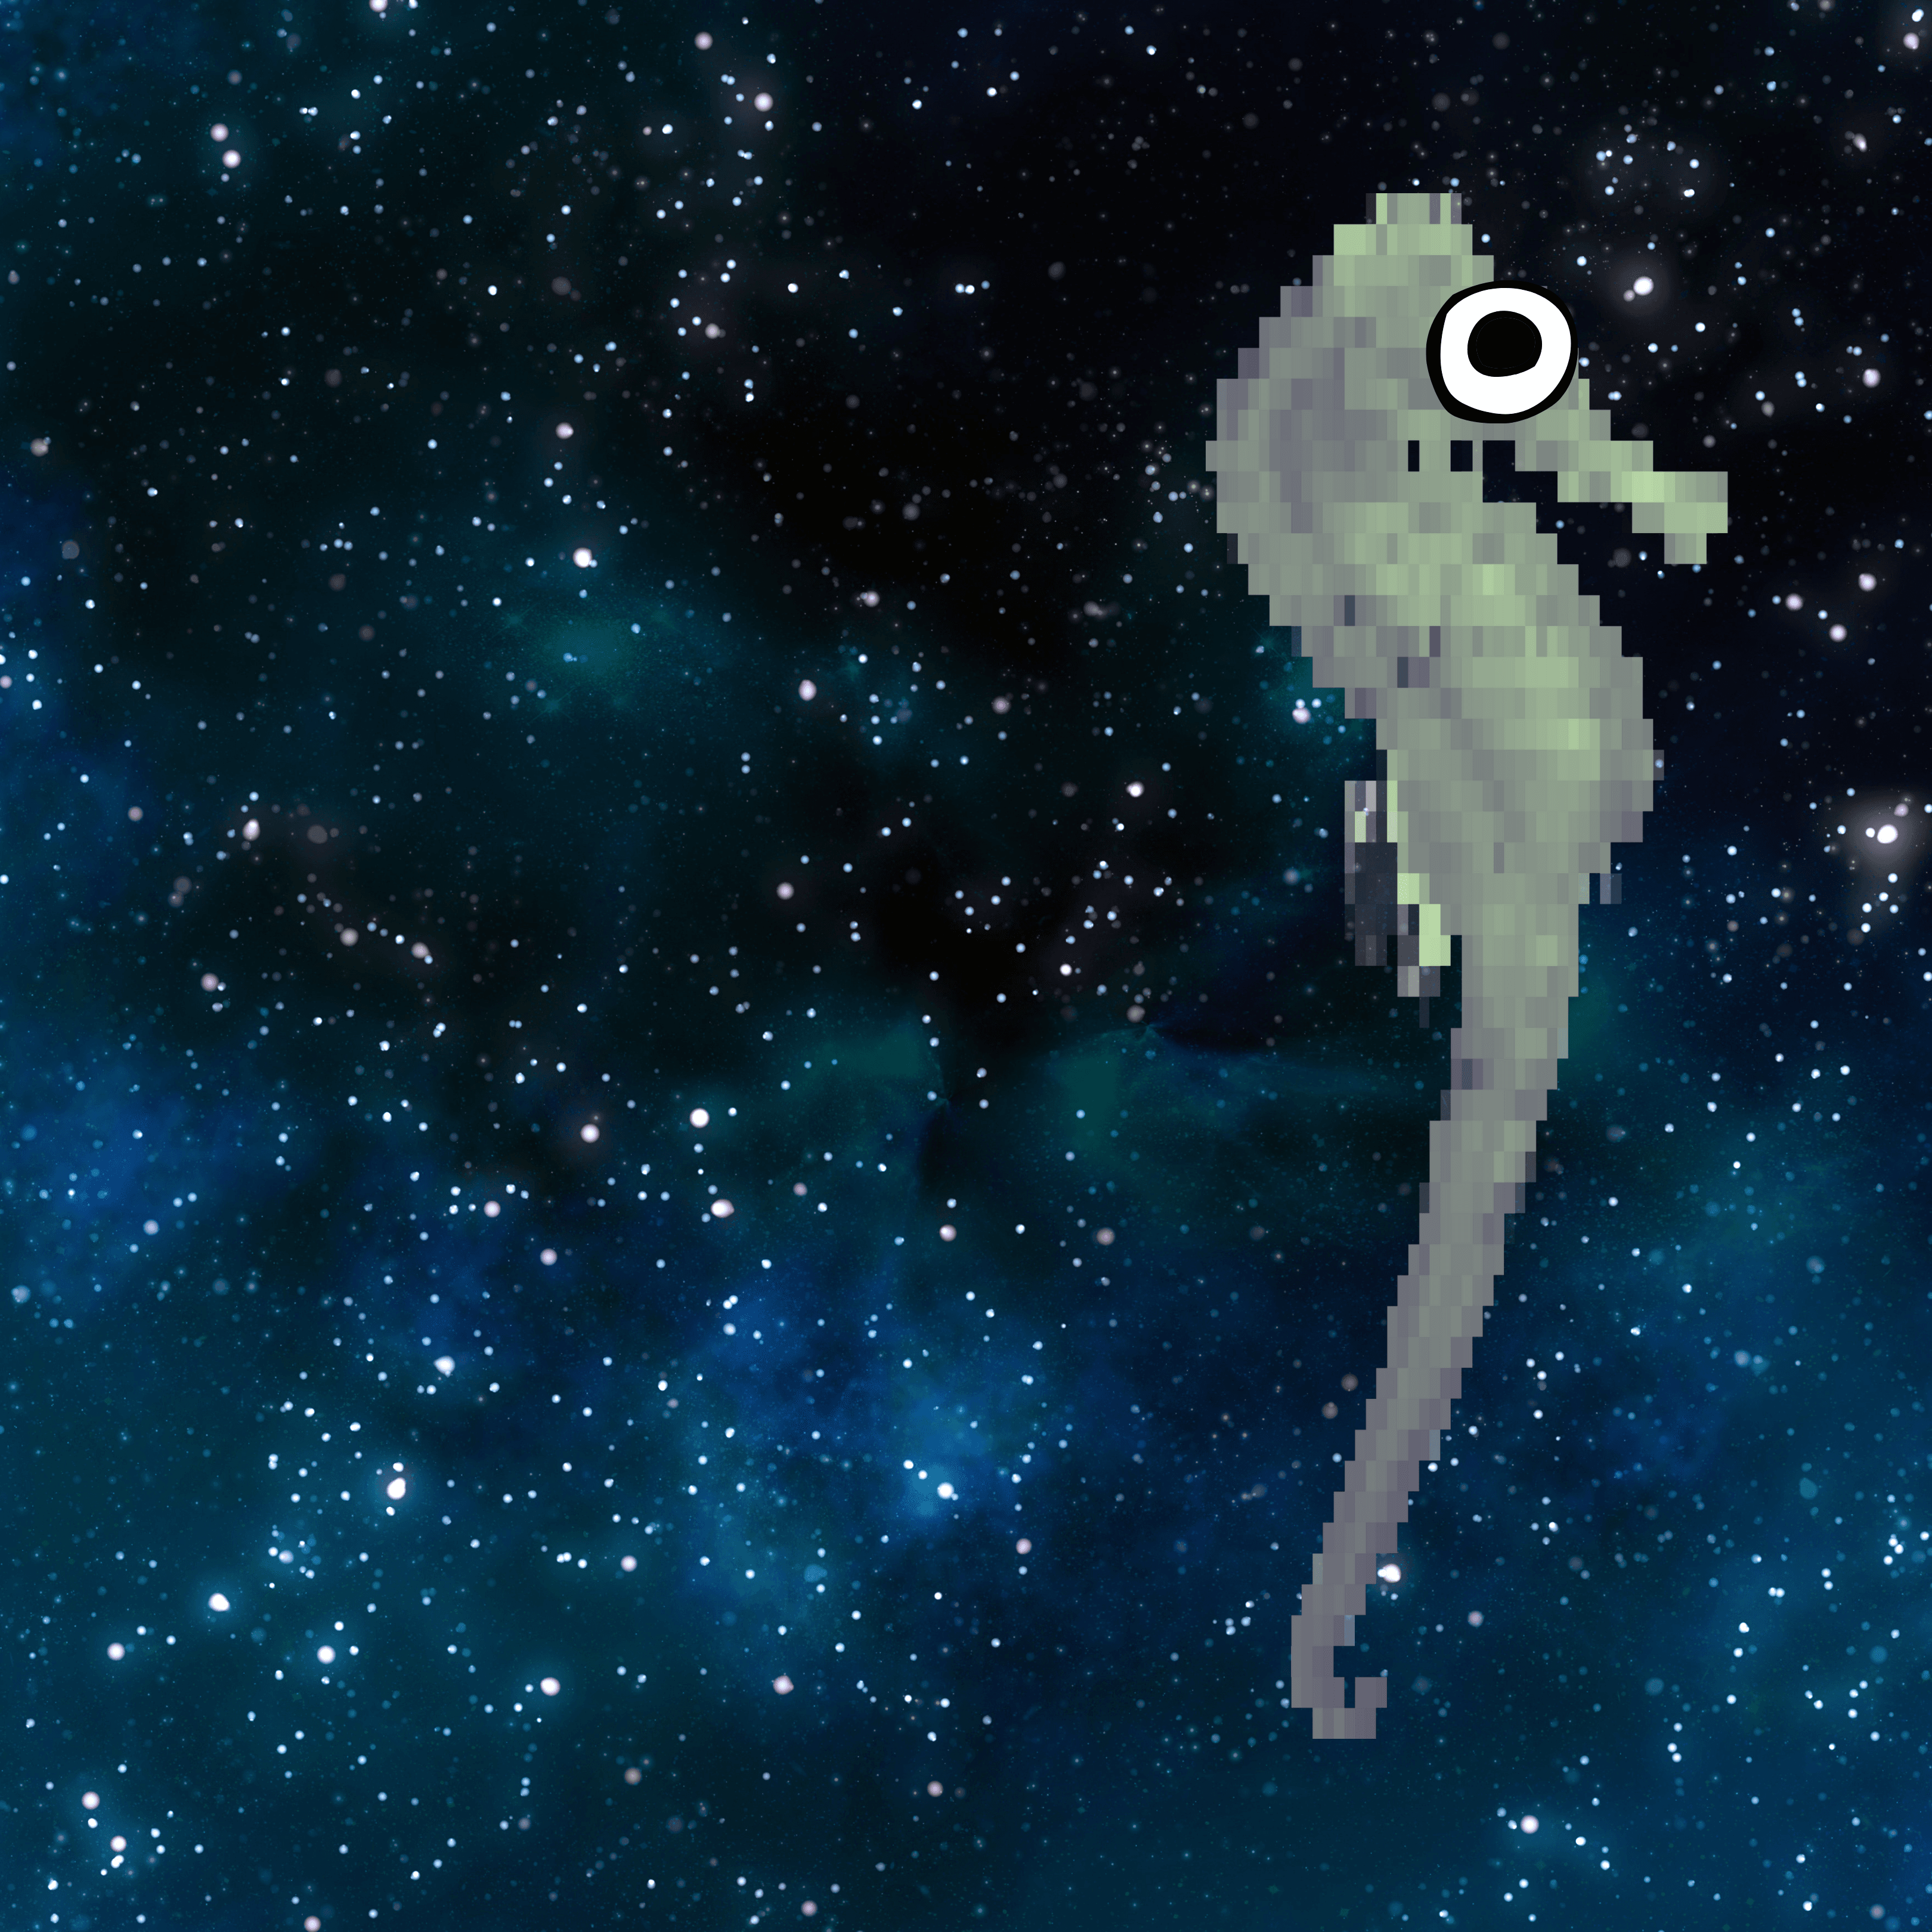 Seahorse in Space VIII